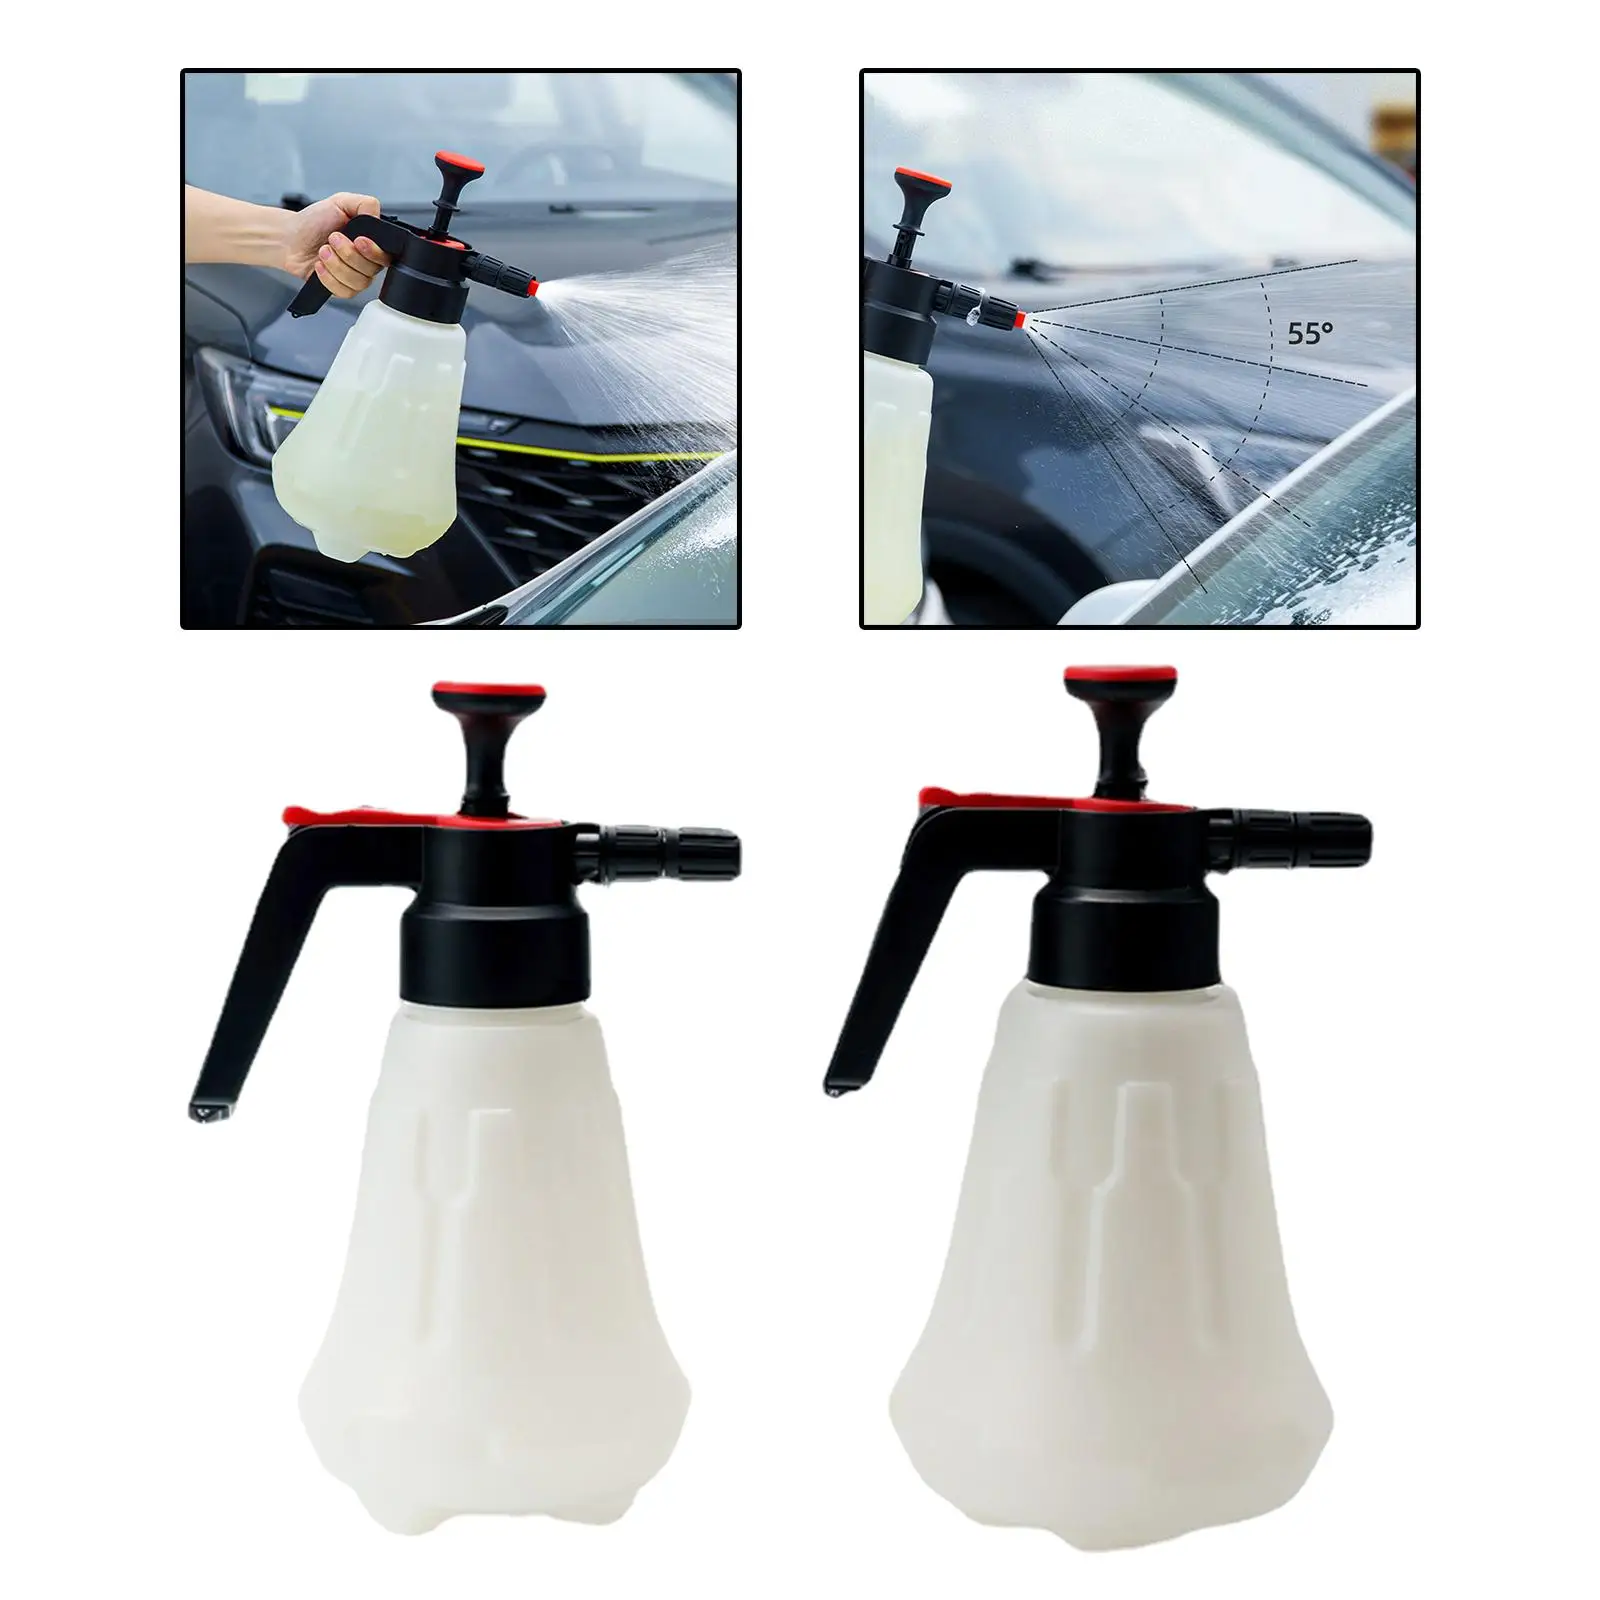 Manual Pump Sprayer High Pressure Handheld Foam Pressure Sprayer Car Wash Cleaning Sprayer Foam Bottle for Window Car Washing